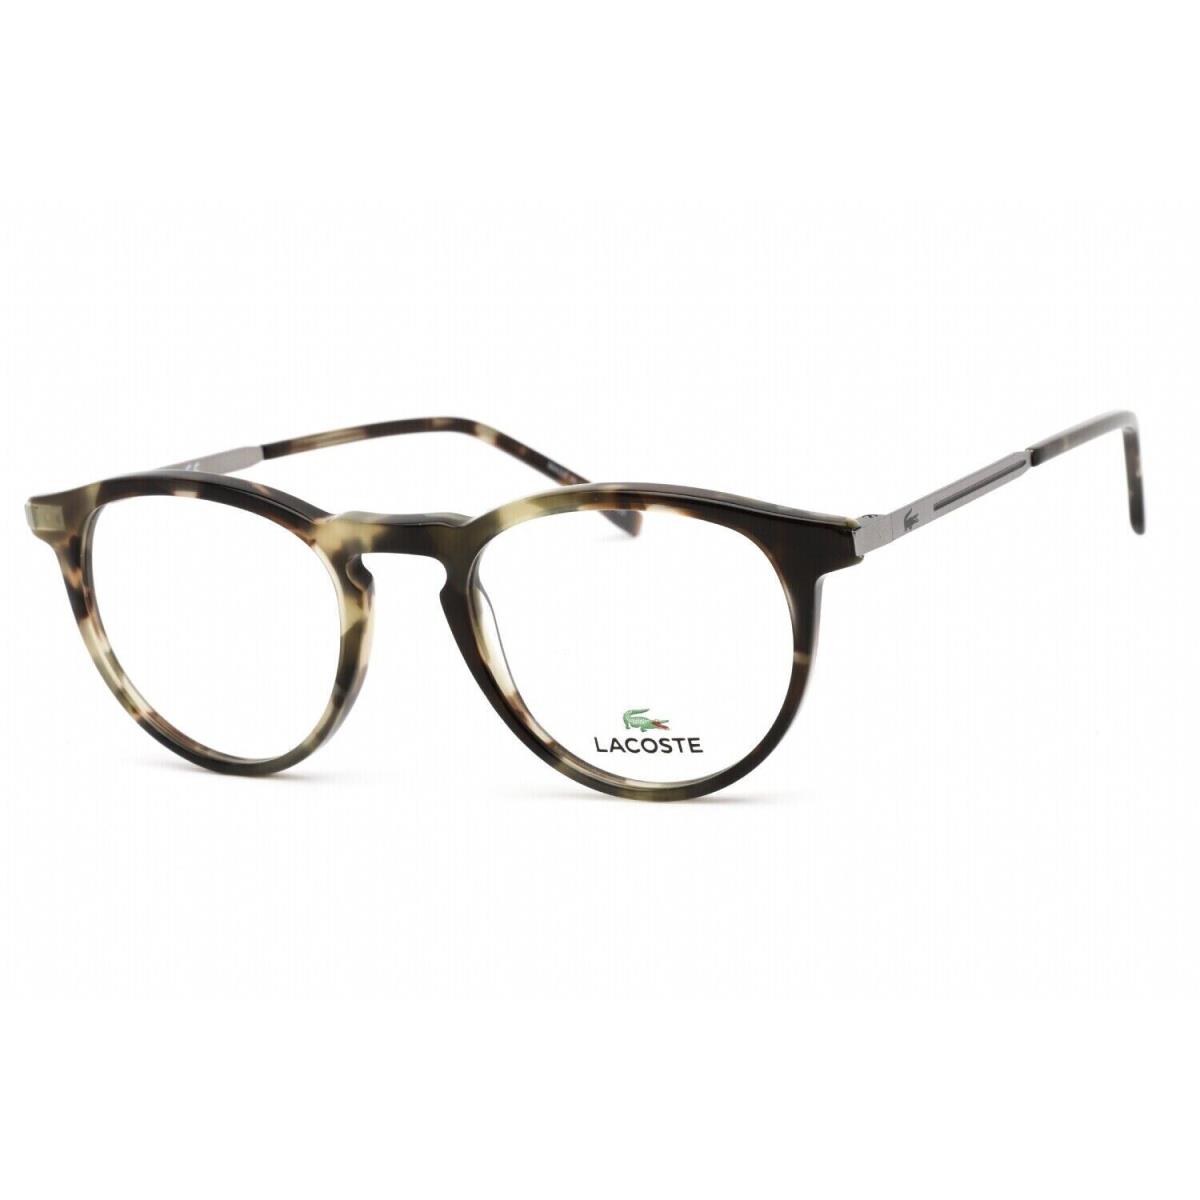 Lacoste Eyeglasses Frame - L2872 220 - Green Havana 49-20-145